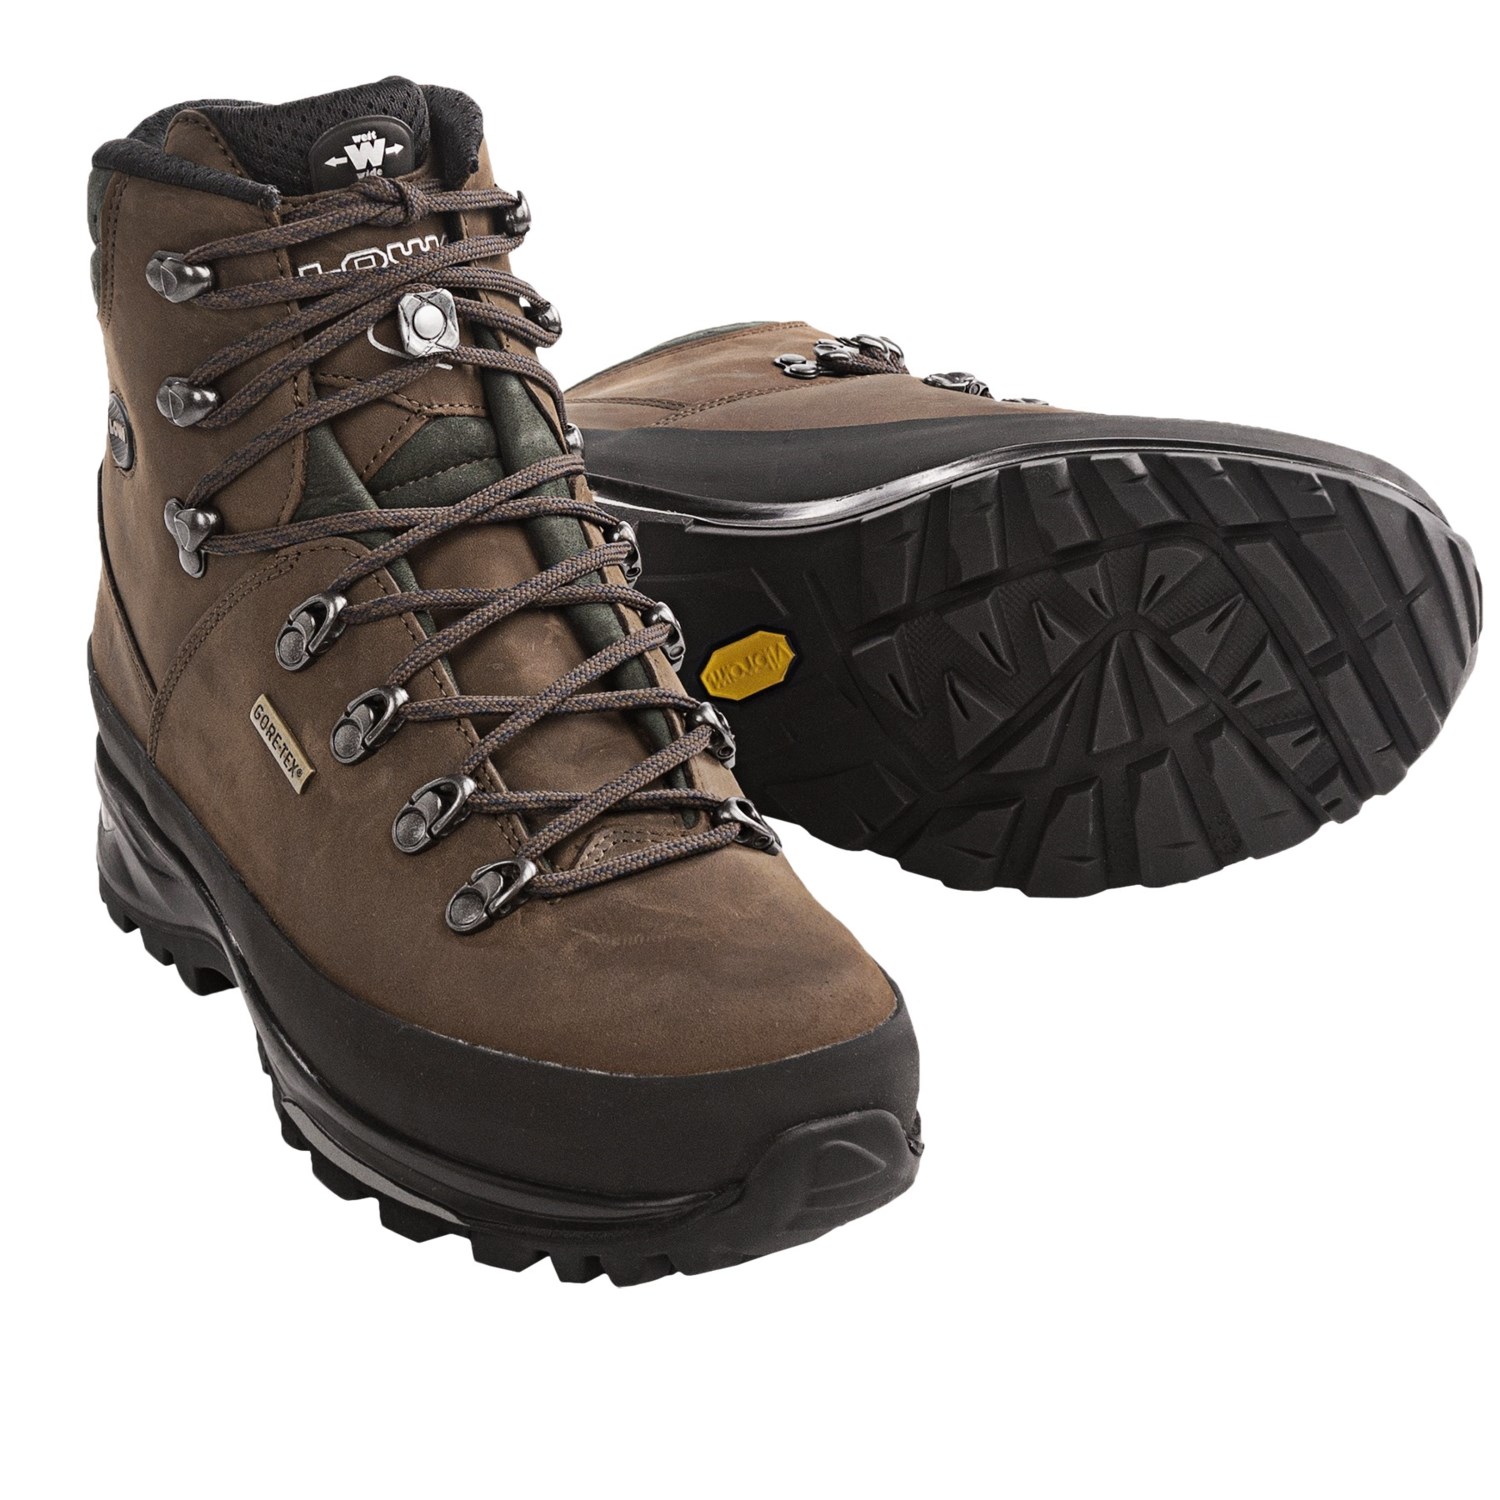 Lowa Ranger Gore-Tex® Hi Trekking Boots (For Men) 7117G - Save 32%